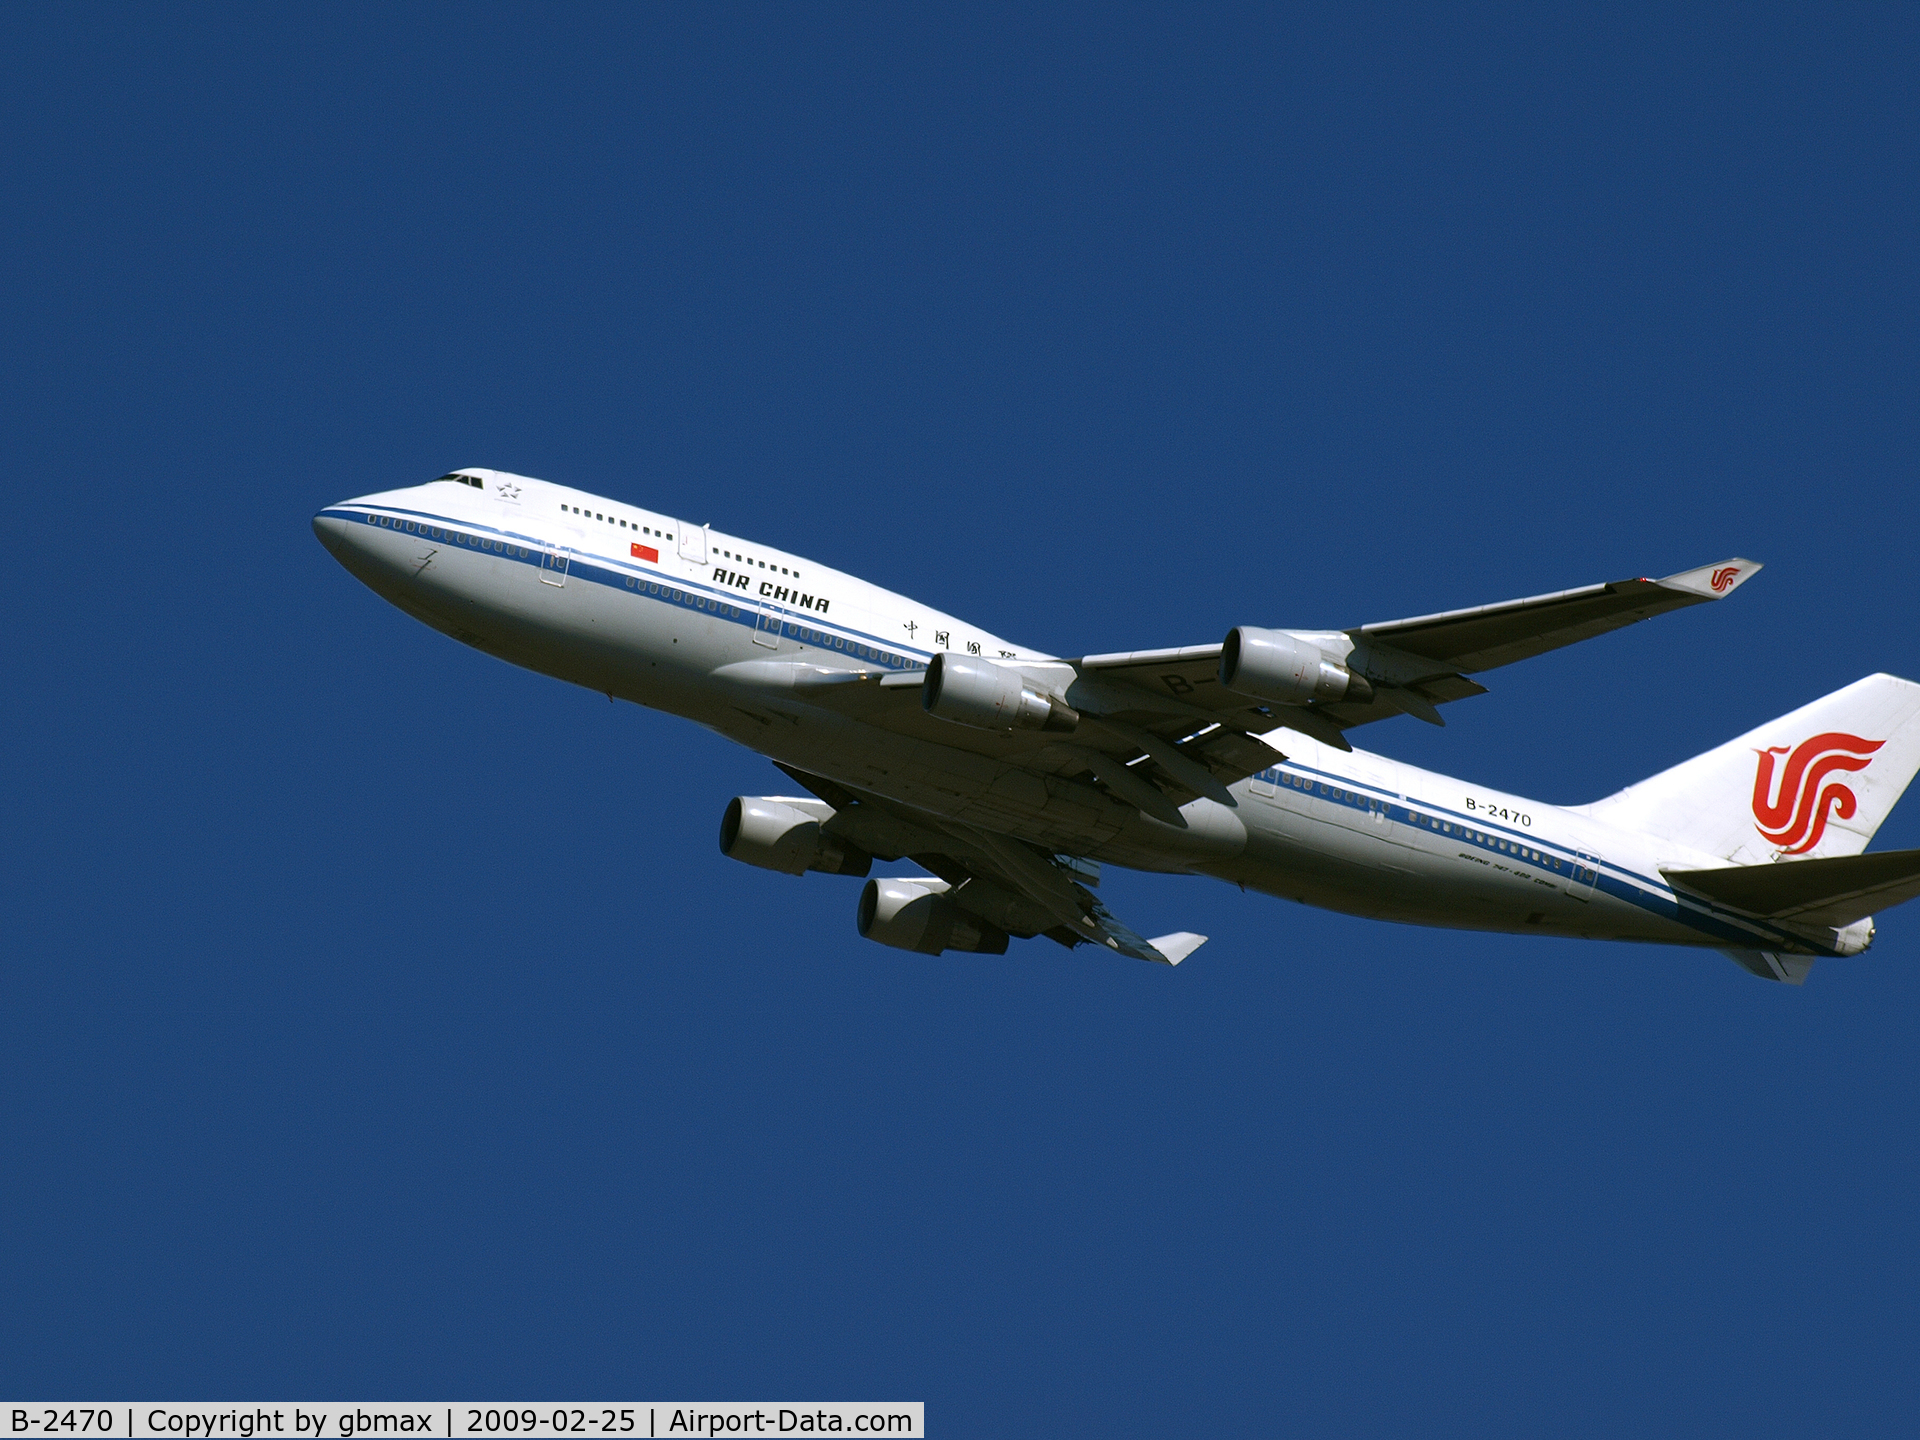 B-2470, 1998 Boeing 747-4J6M C/N 29070, Flying @ ~3,500 feet high, going to a landing at JFK